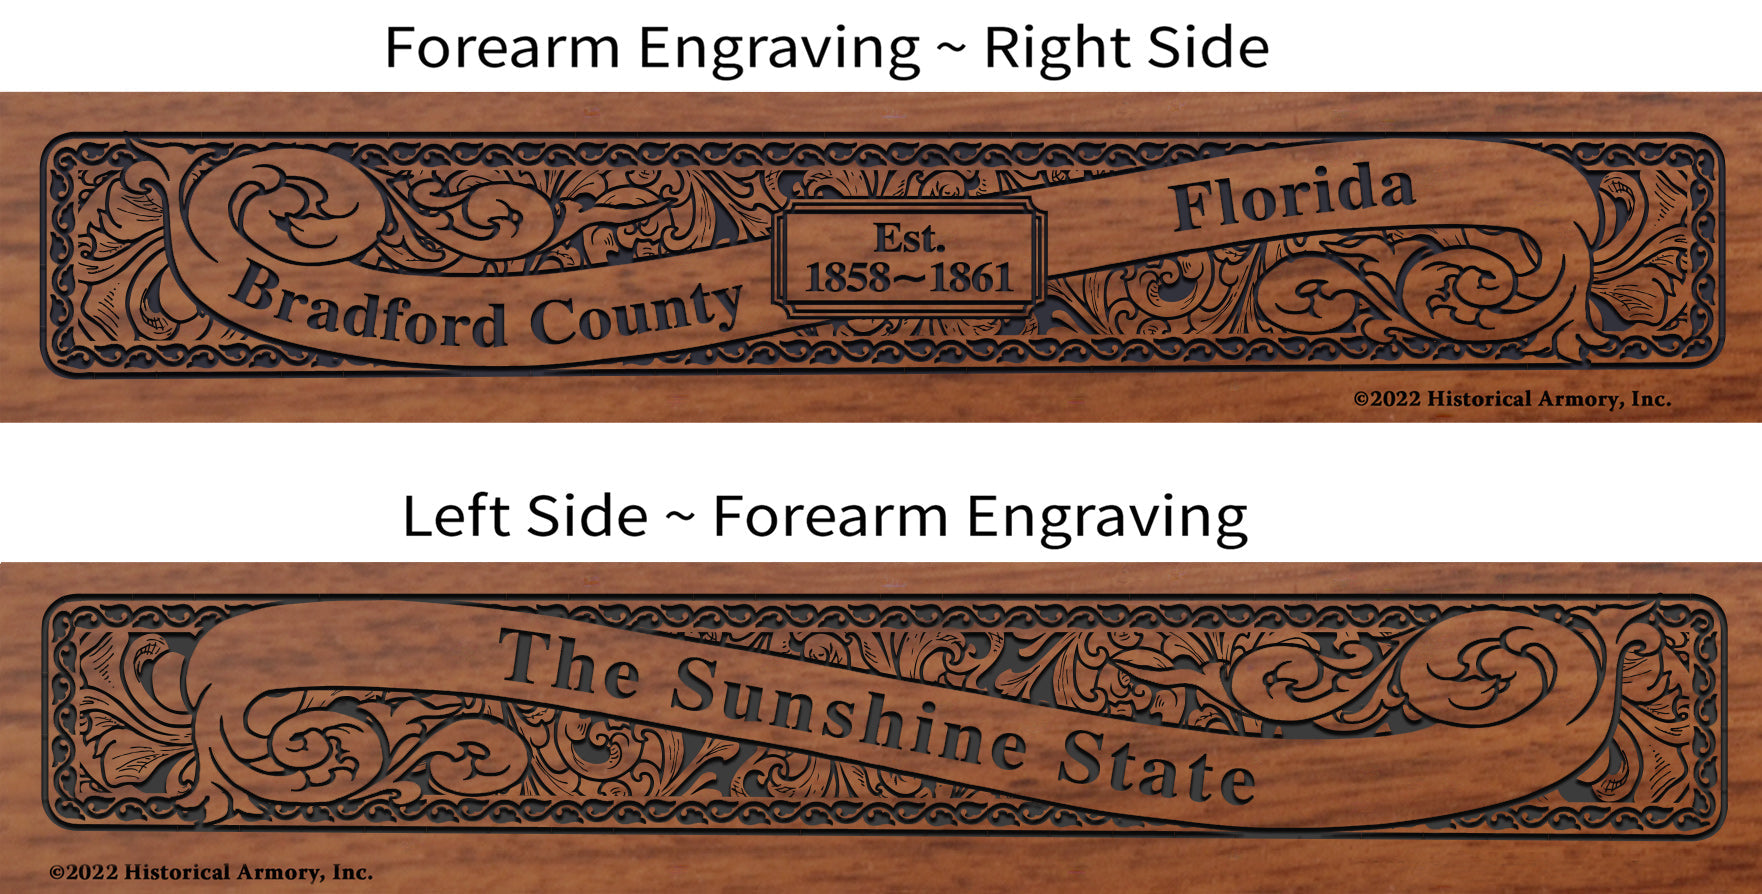 Bradford County Florida Engraved Rifle Forearm